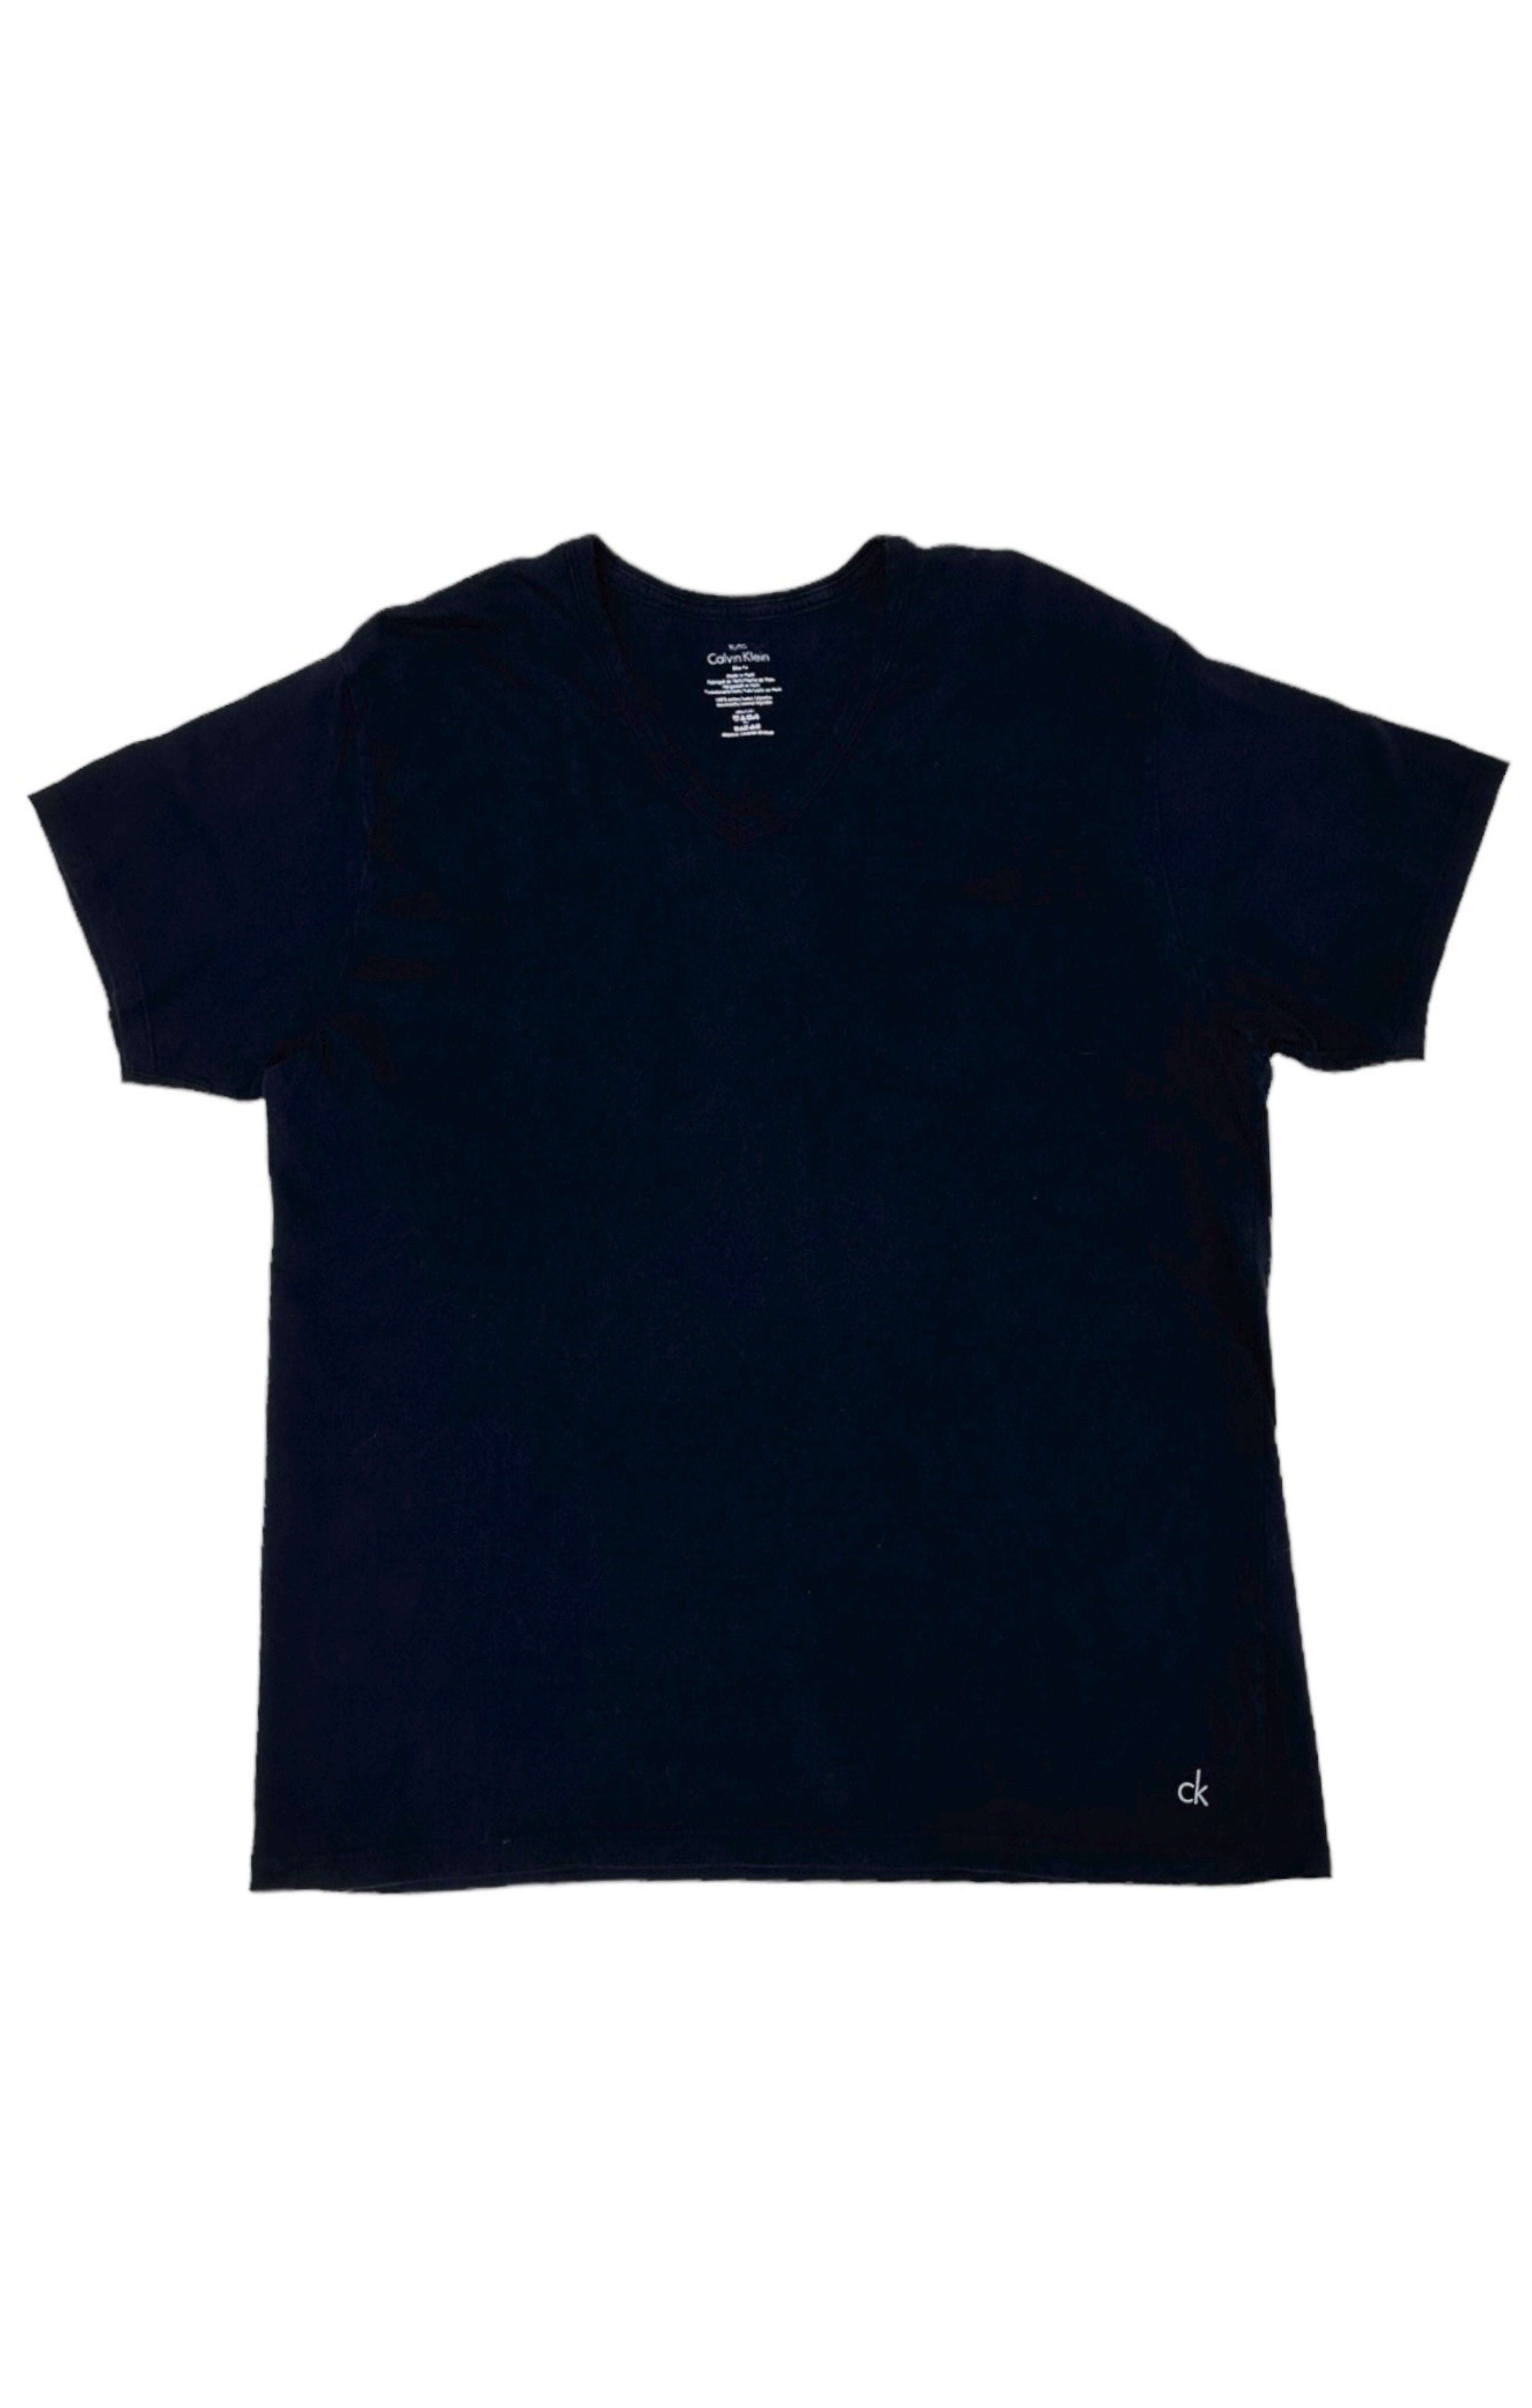 CALVIN KLEIN T-shirt Size: XL